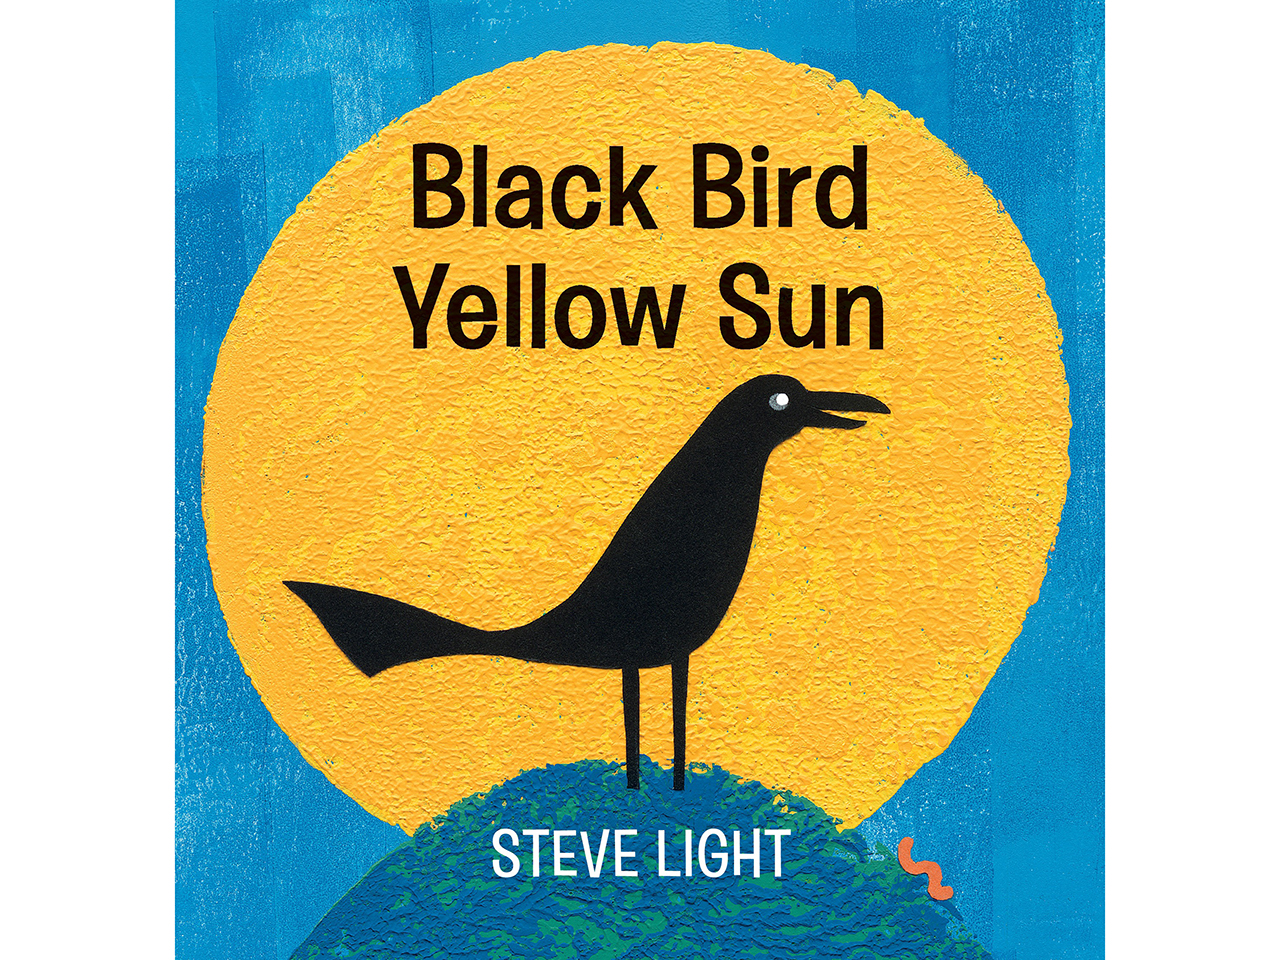 Black Bird Yellow Sun by Steve Light